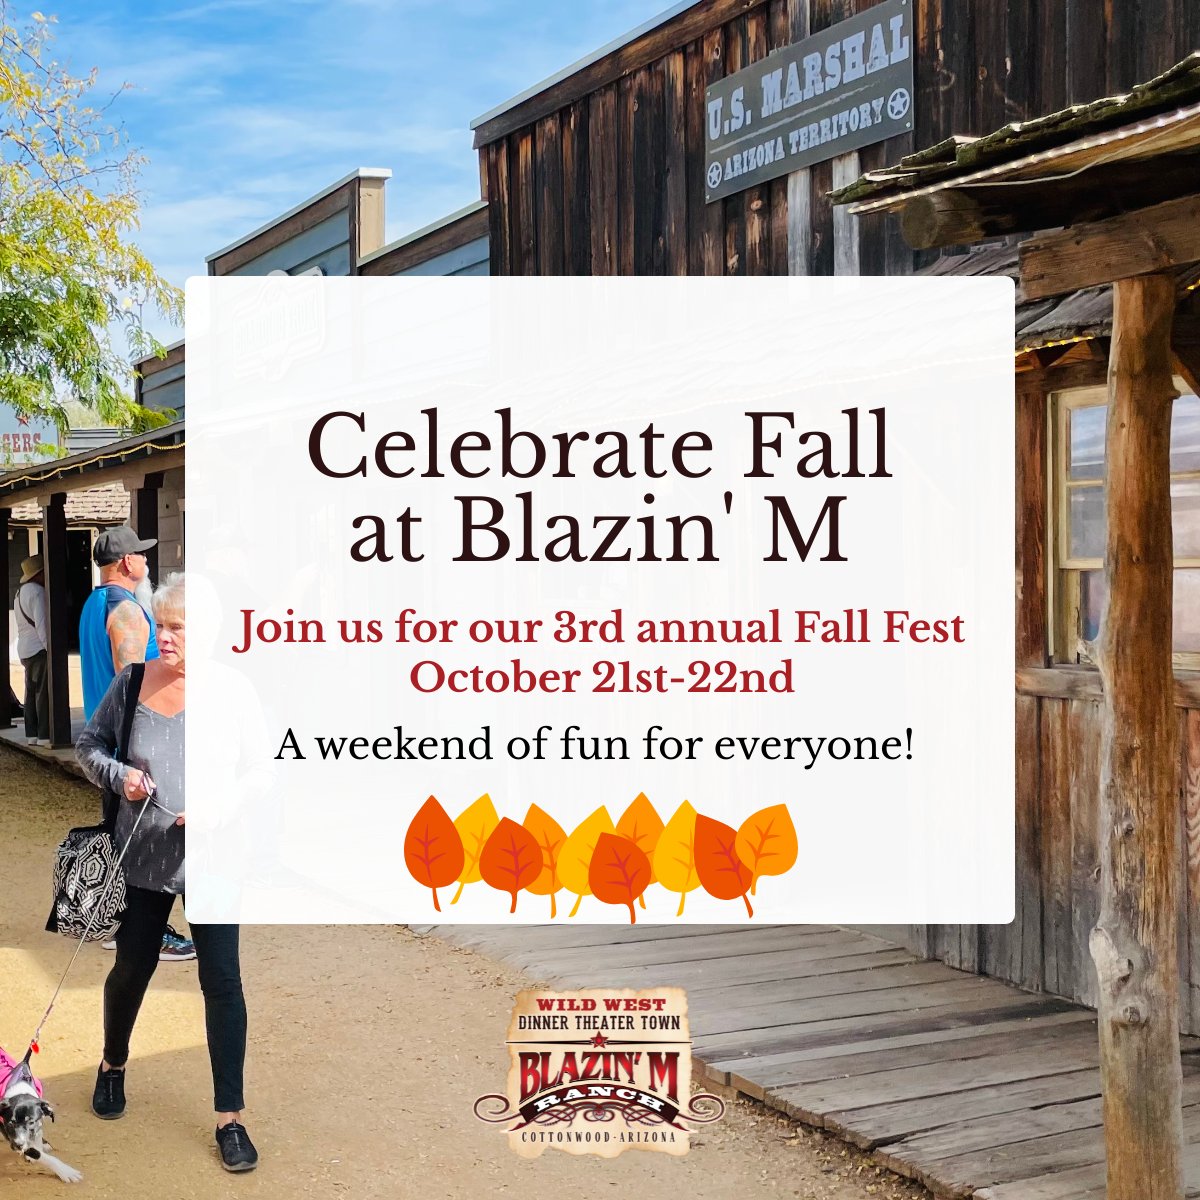 Join us at the Blazin' M Ranch for our third annual Fall Fest on October 21-22, from 10 am to 5 pm. Pre-purchase tickets here 👉 zurl.co/kmP1 

#BlazinMFallFest #CottonwoodFallFest #Sedona #ThingsToDoInSedona #ArizonaTravel #BlazinMRanch #VerdeValleysGotTalent